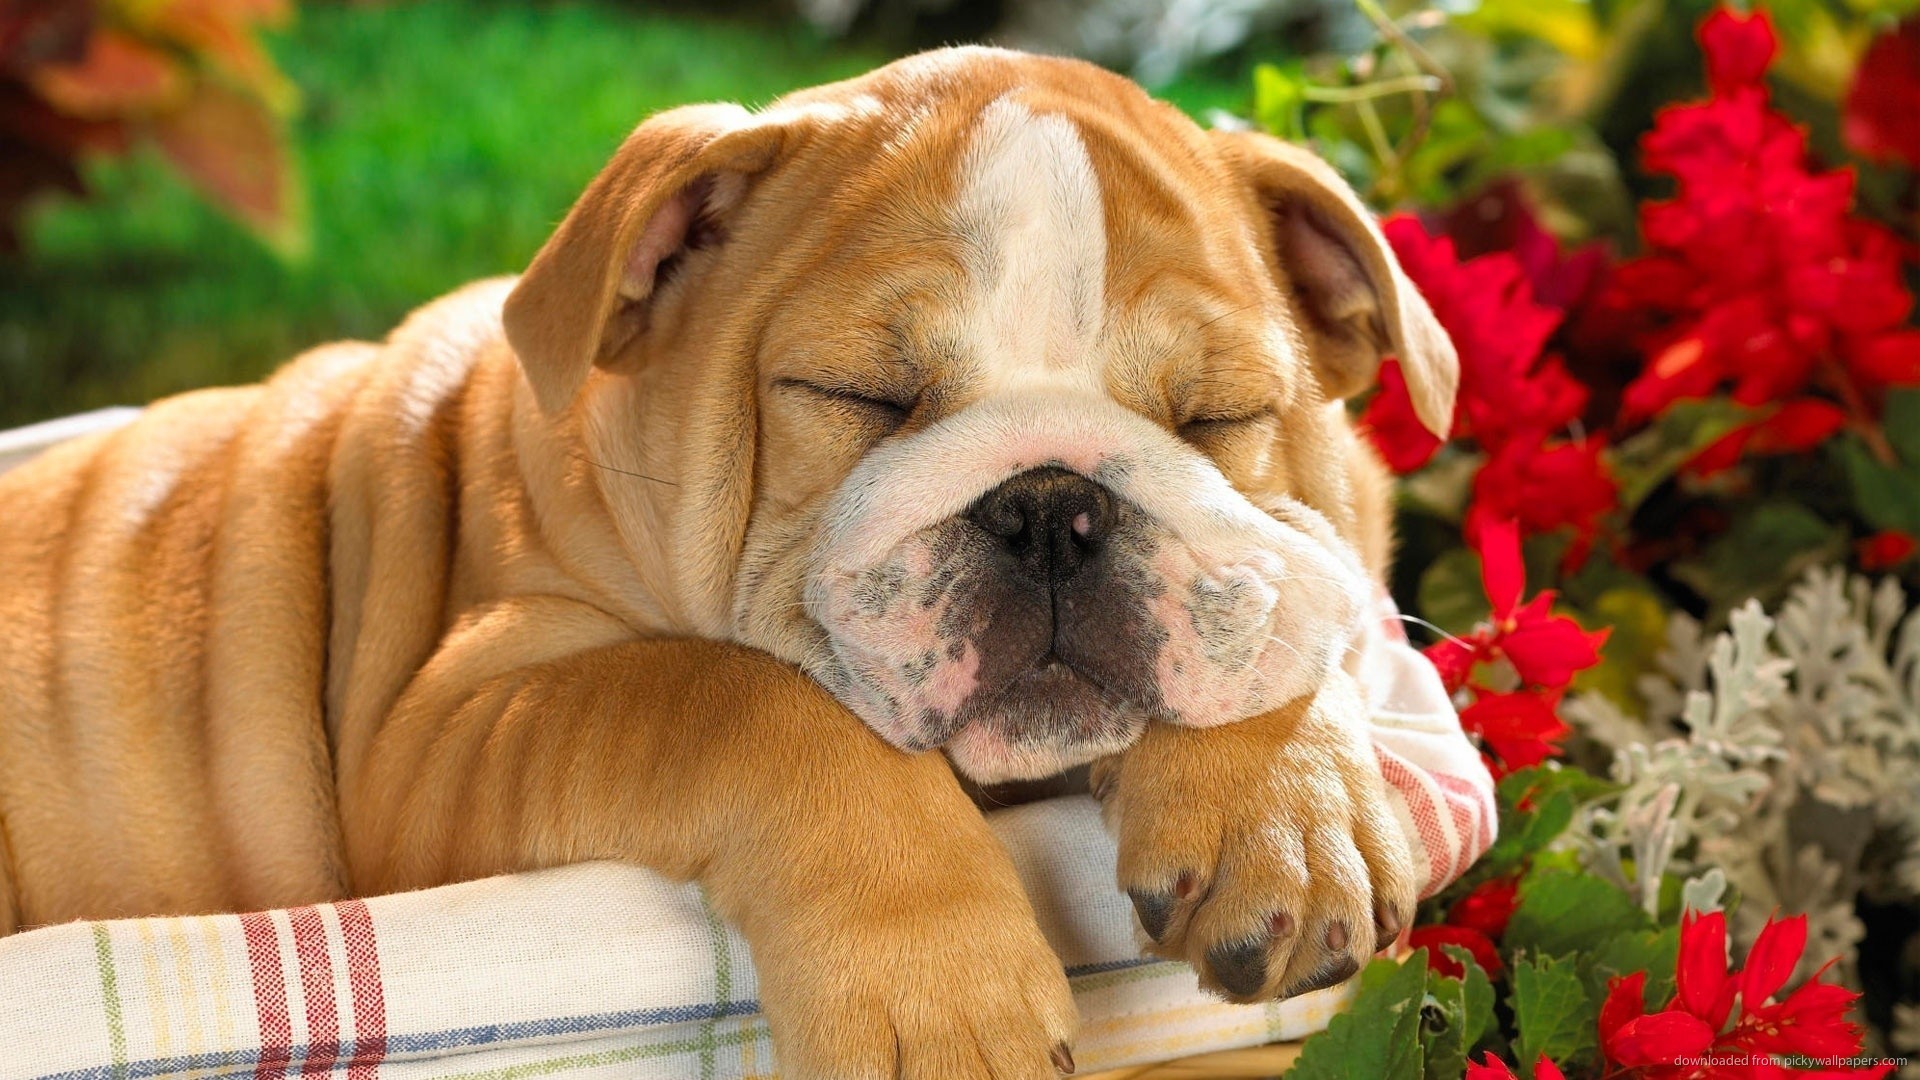 Cute Bulldog Sleeping In A Basket Wallpaper